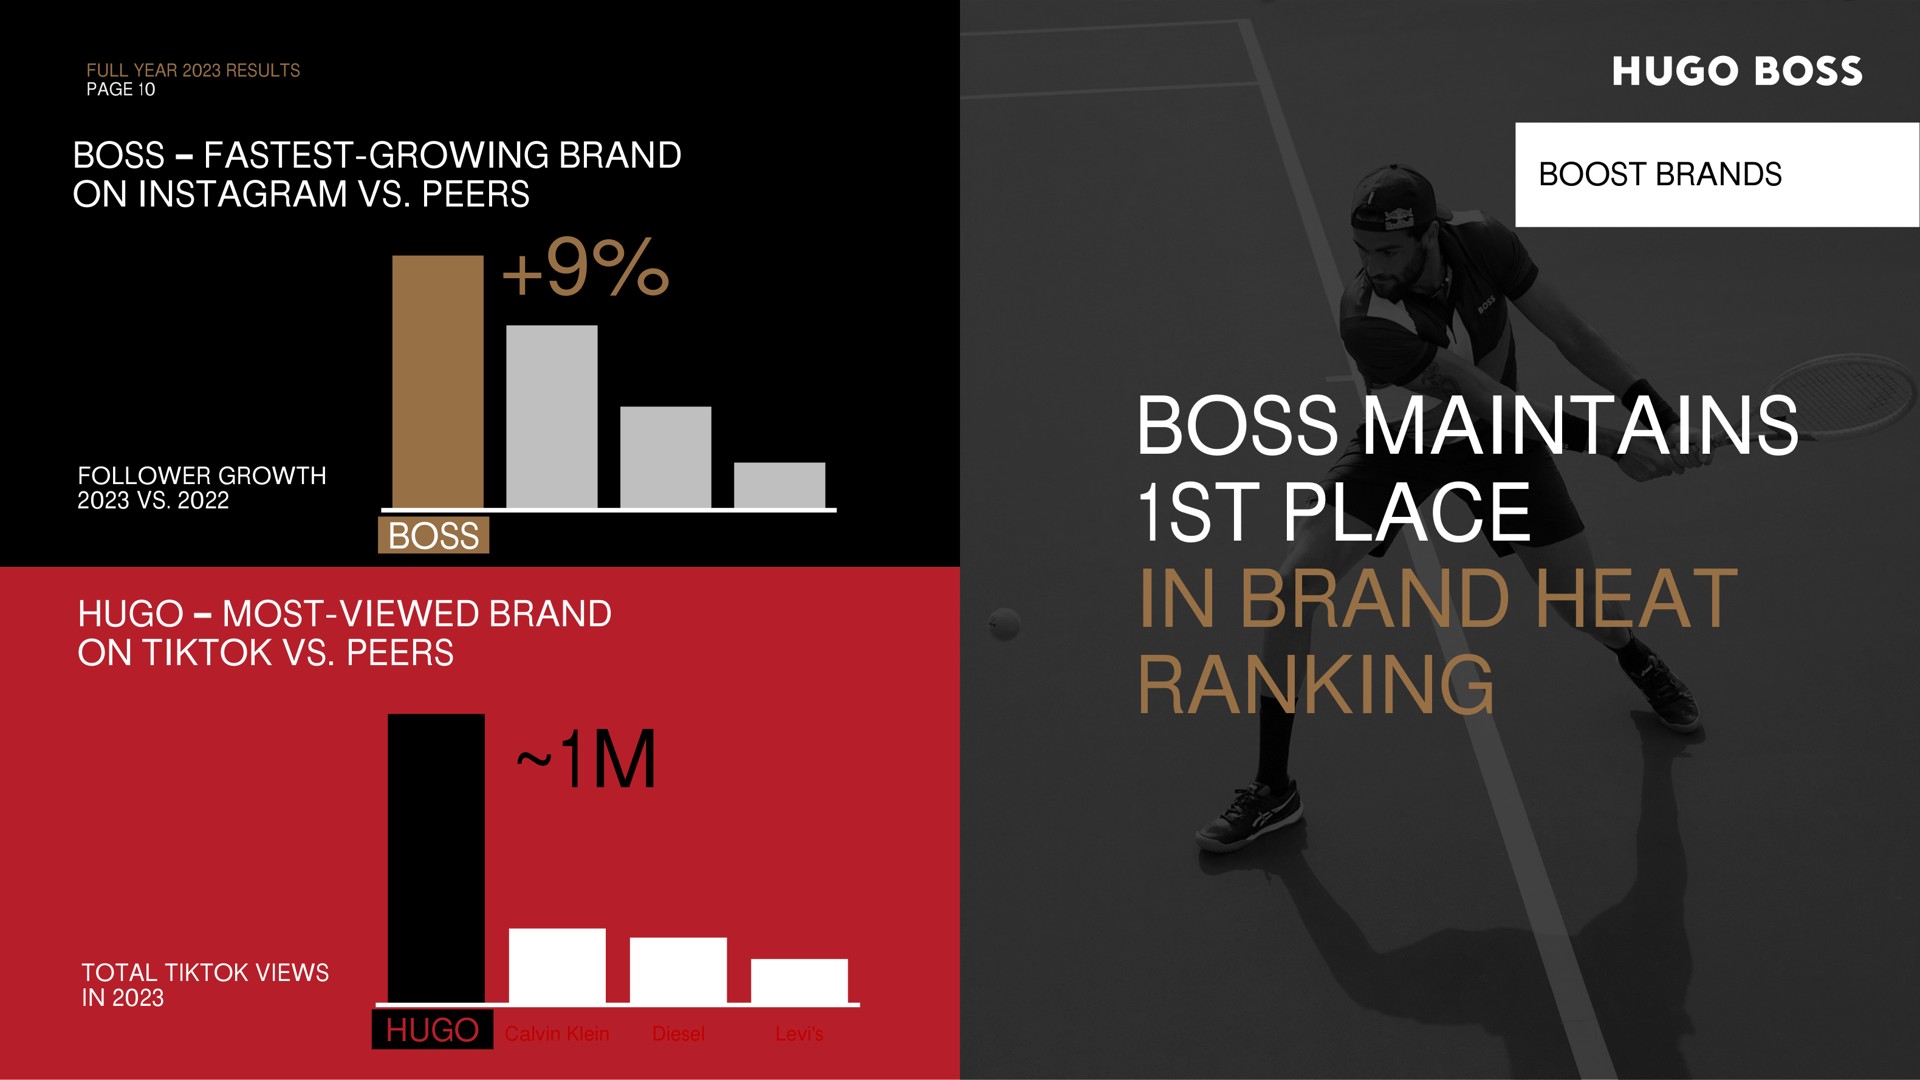 boss growing brand on peers boss most viewed brand on peers boost brands boss maintains place in brand heat ranking | Hugo Boss